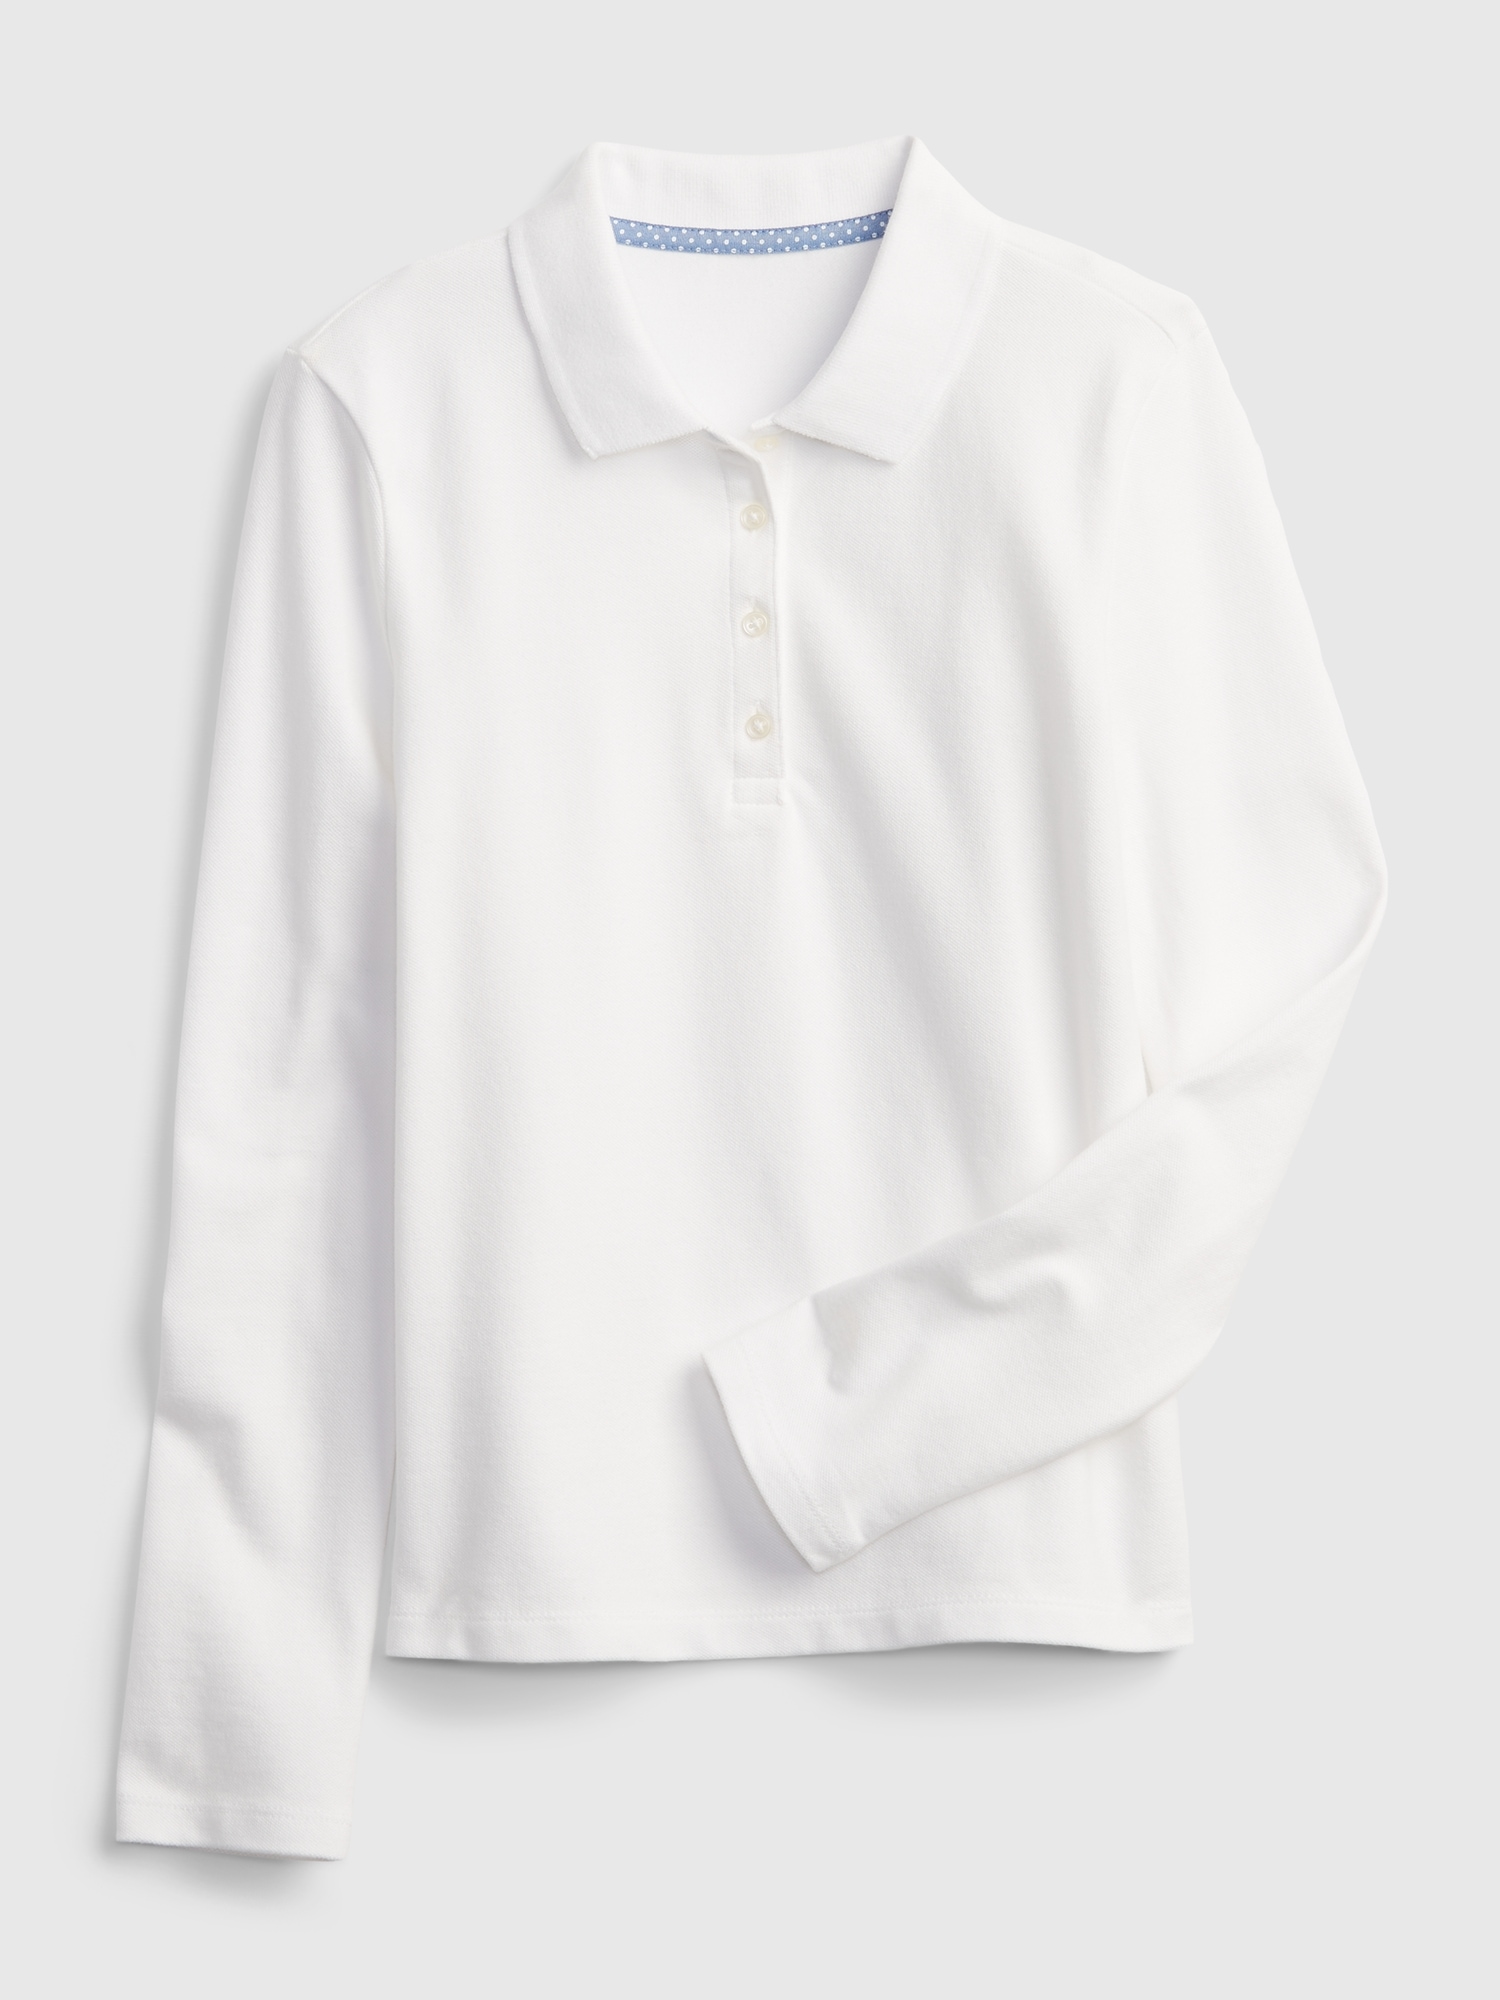 Gap Kids Uniform Polo Shirt white. 1